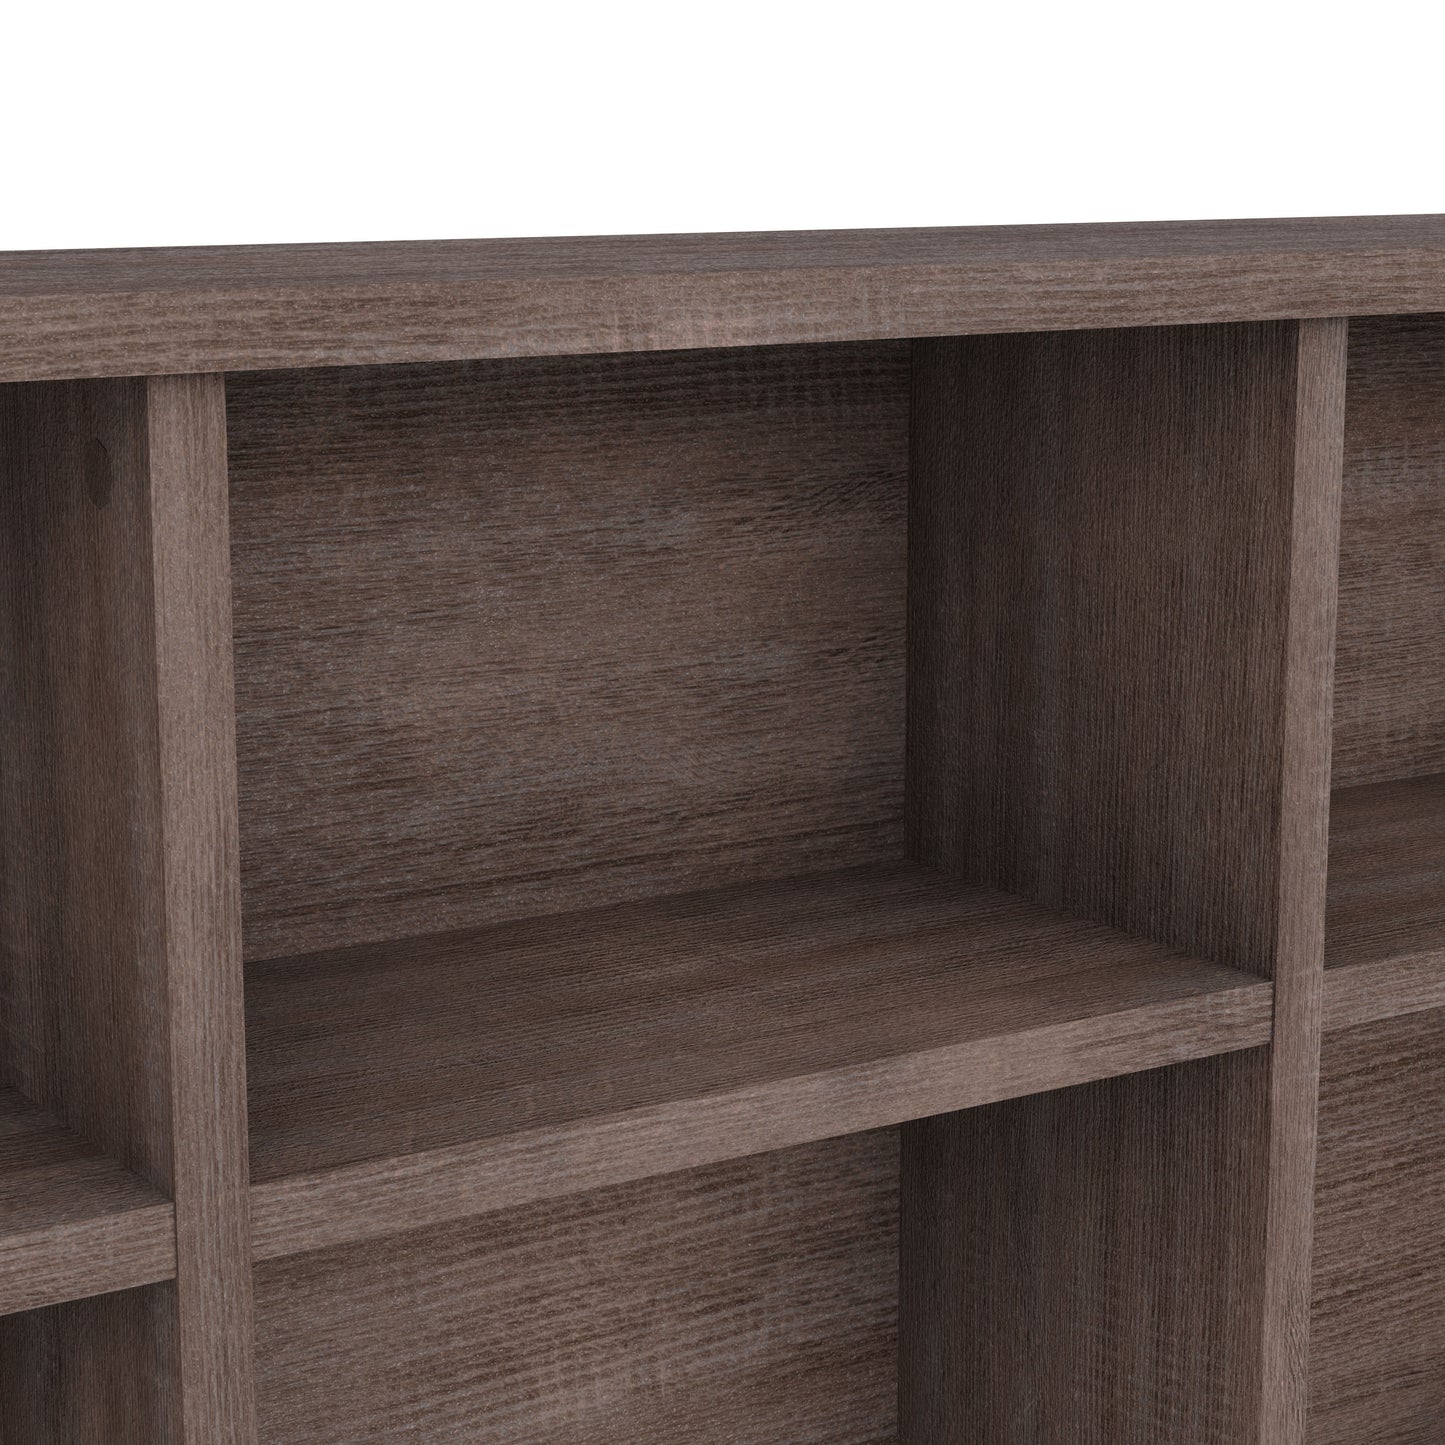 Transitional 6-Shelf Twin-size Bookcase Headboard